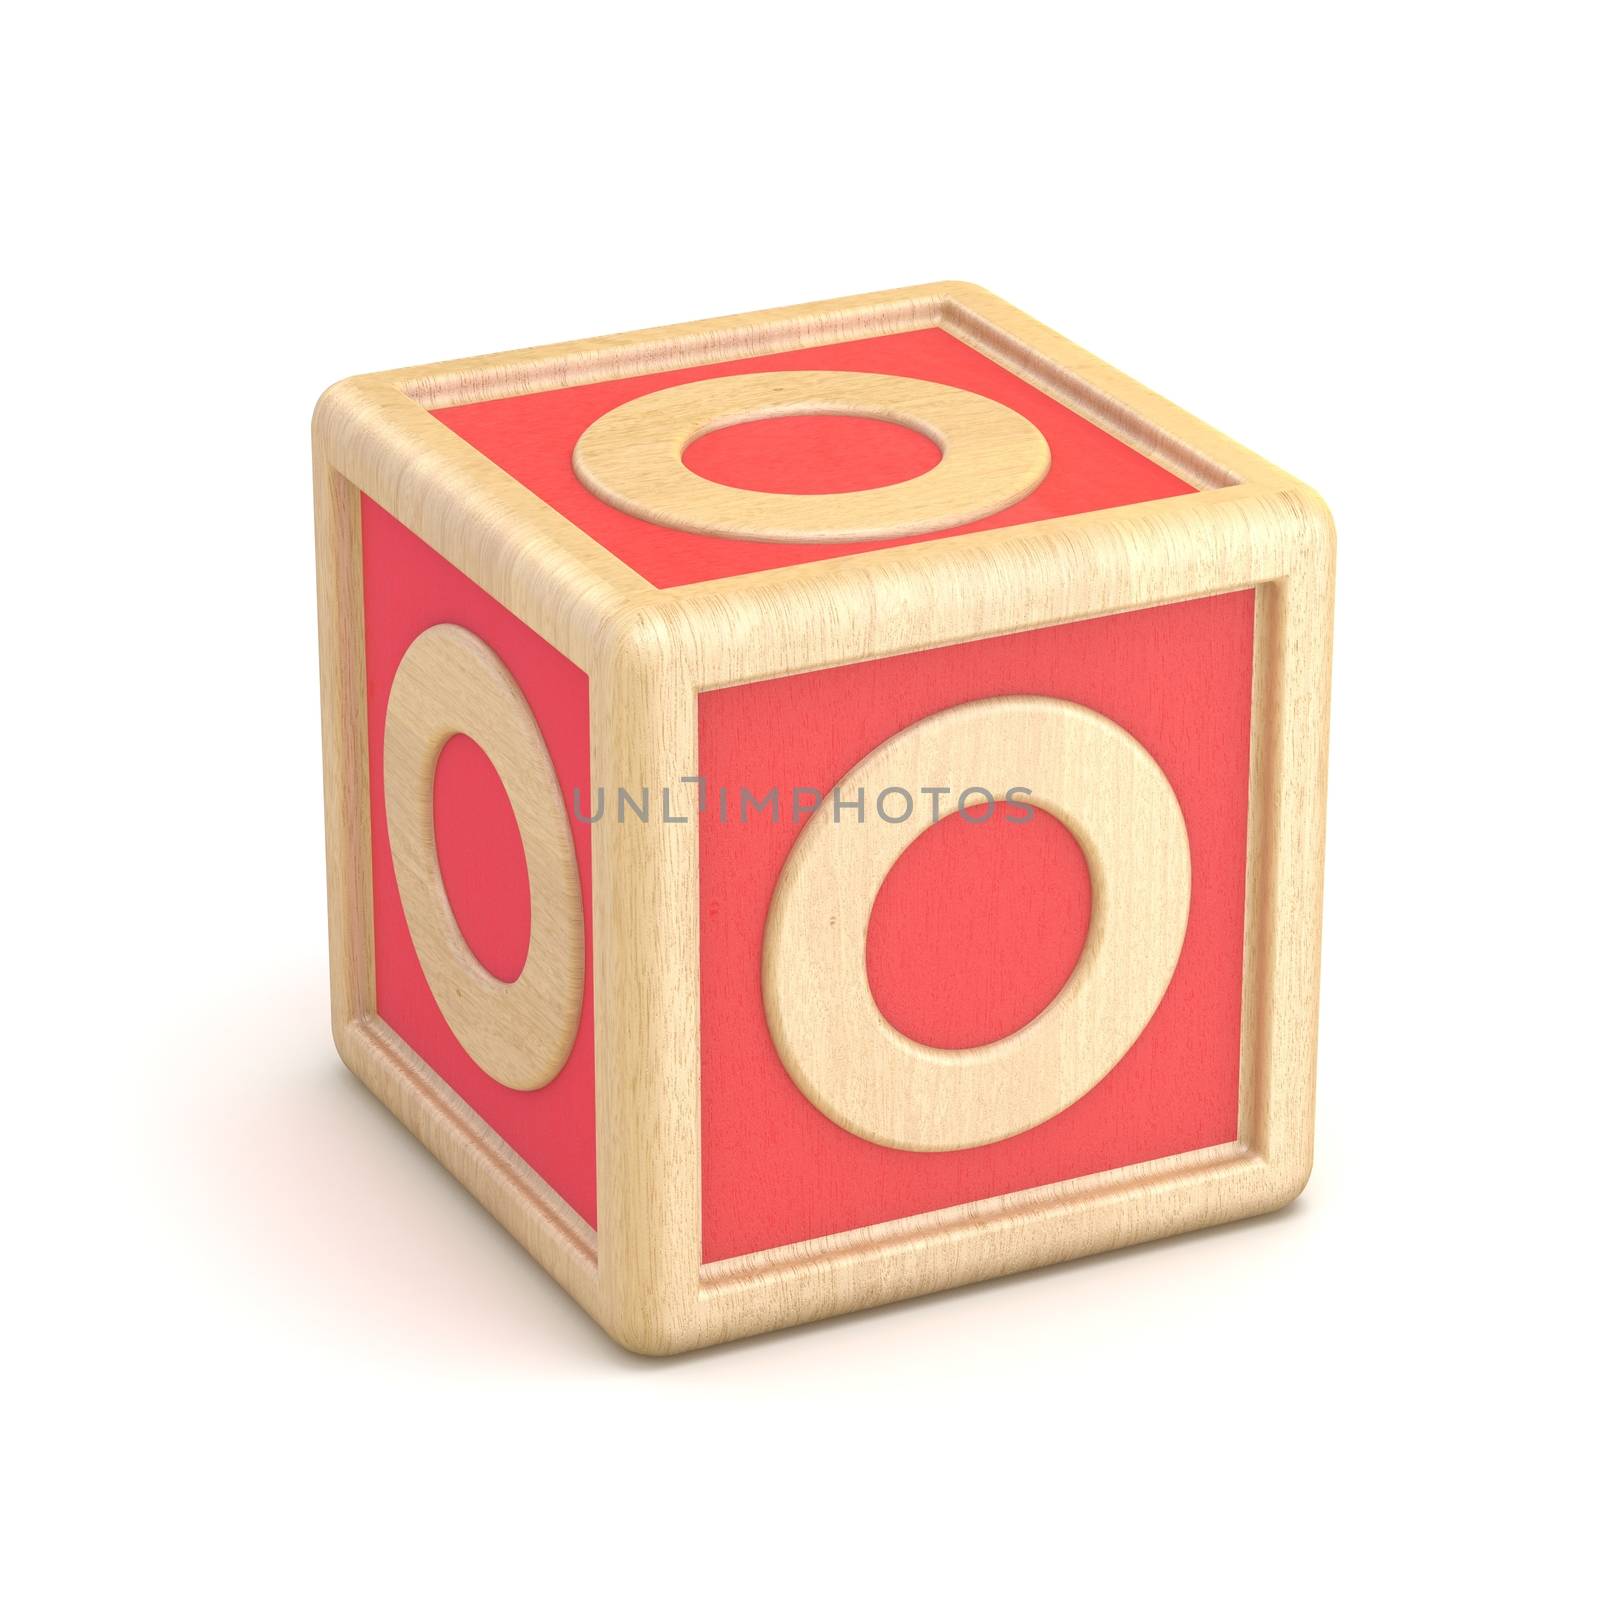 Letter O wooden alphabet blocks font rotated. 3D render illustration isolated on white background